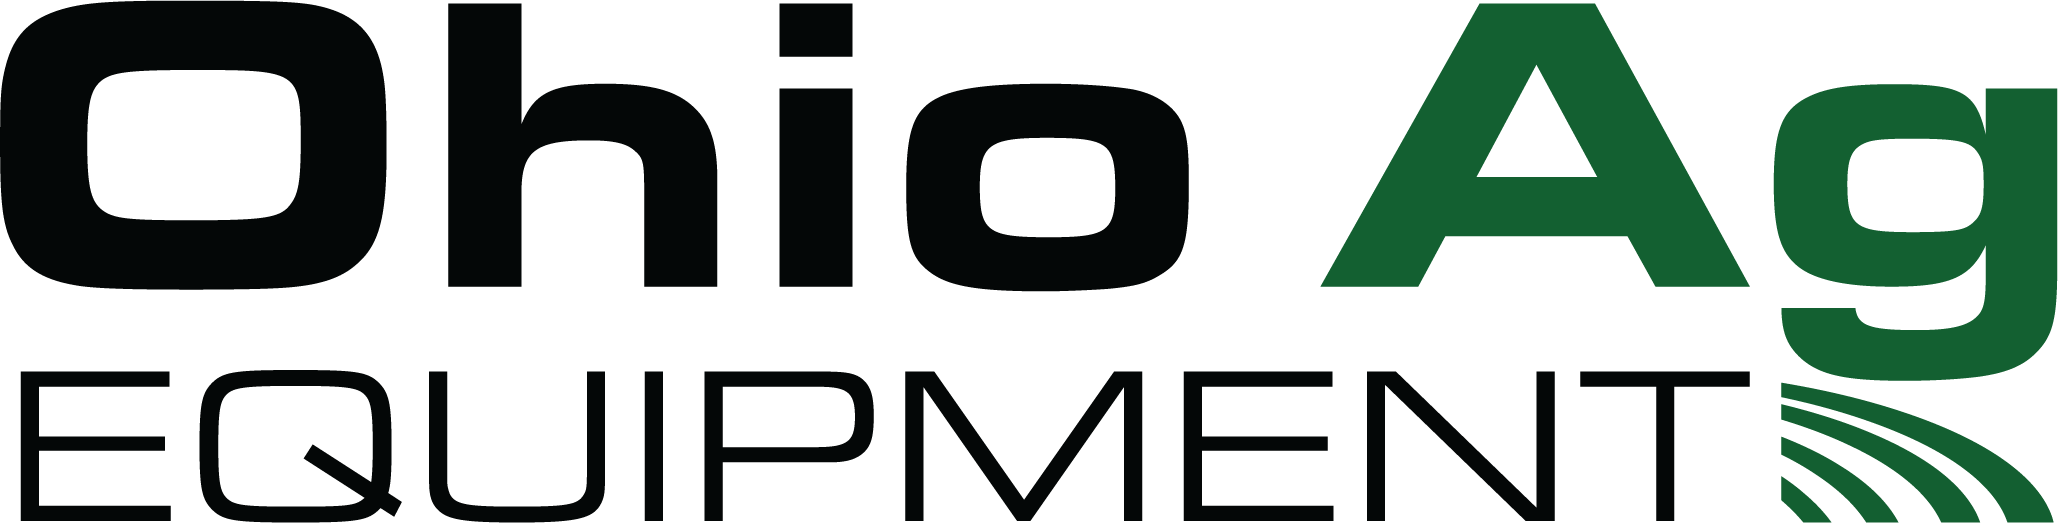 Ohio Ag Equipment logo